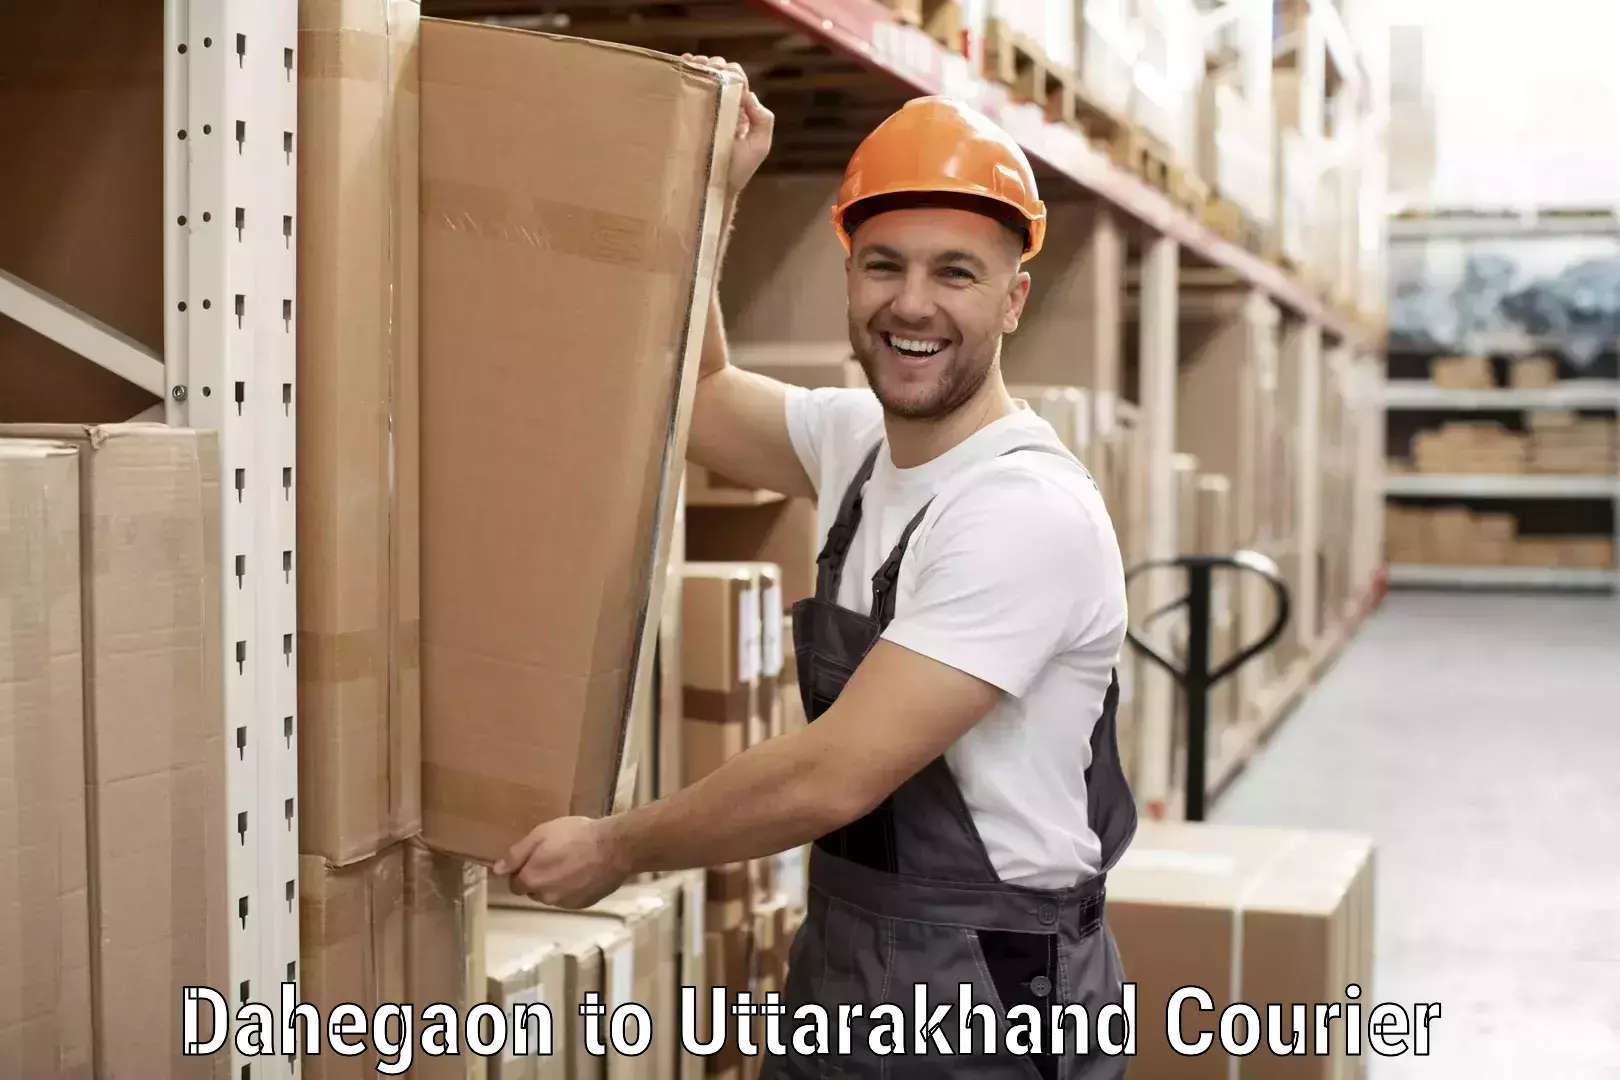 High-speed parcel service Dahegaon to Uttarakhand